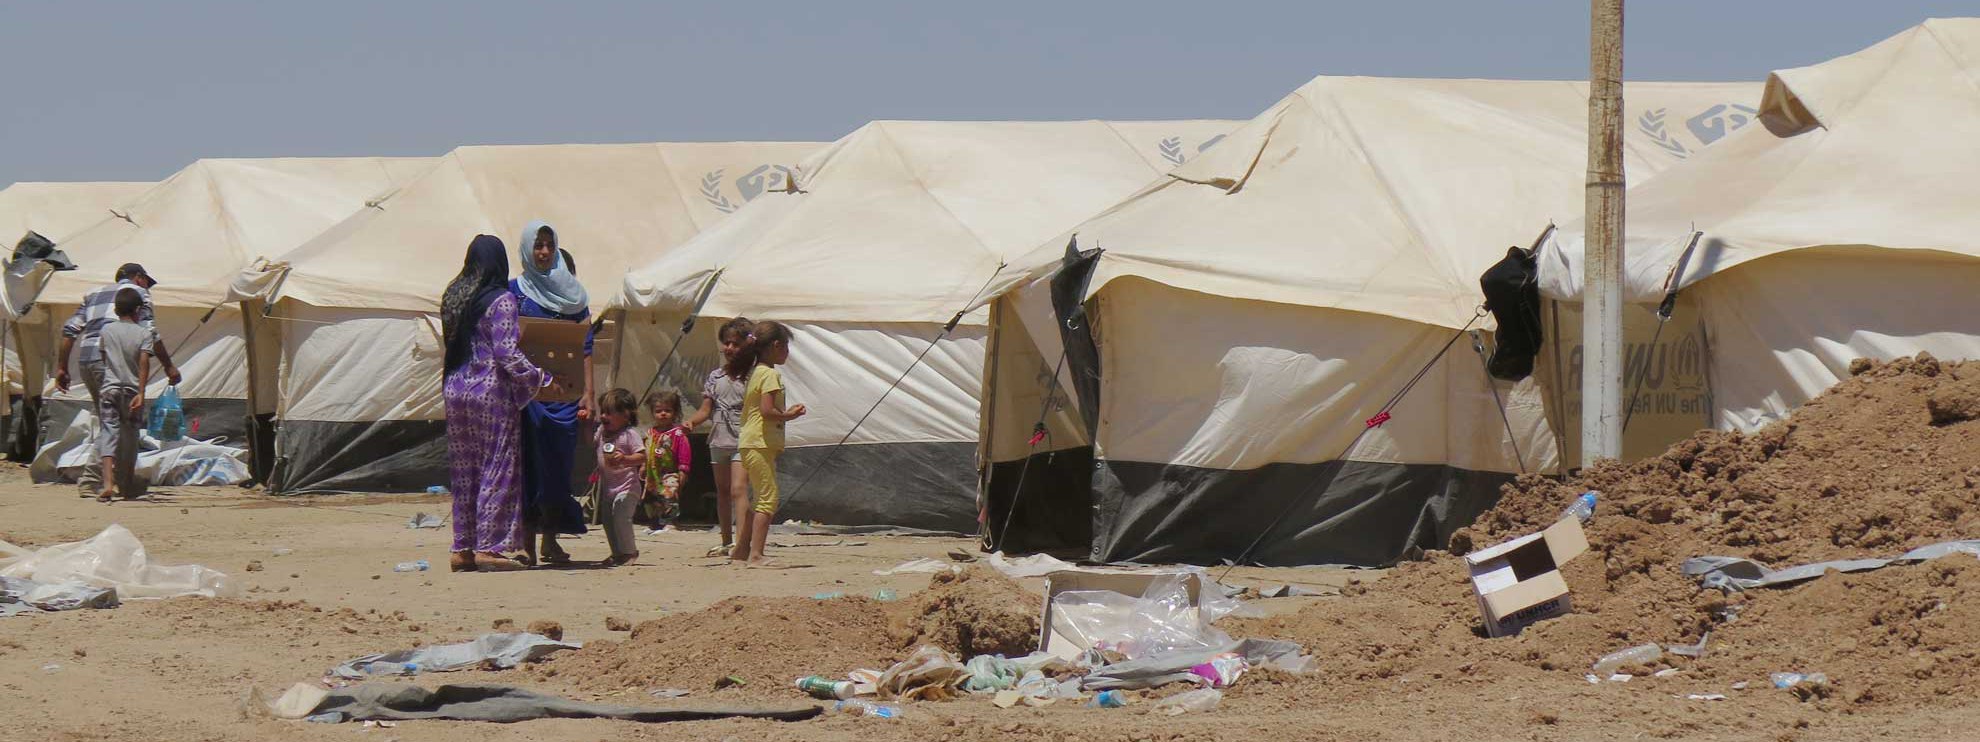 Camp de refugiés à Kalak, Irak. © Amnesty International